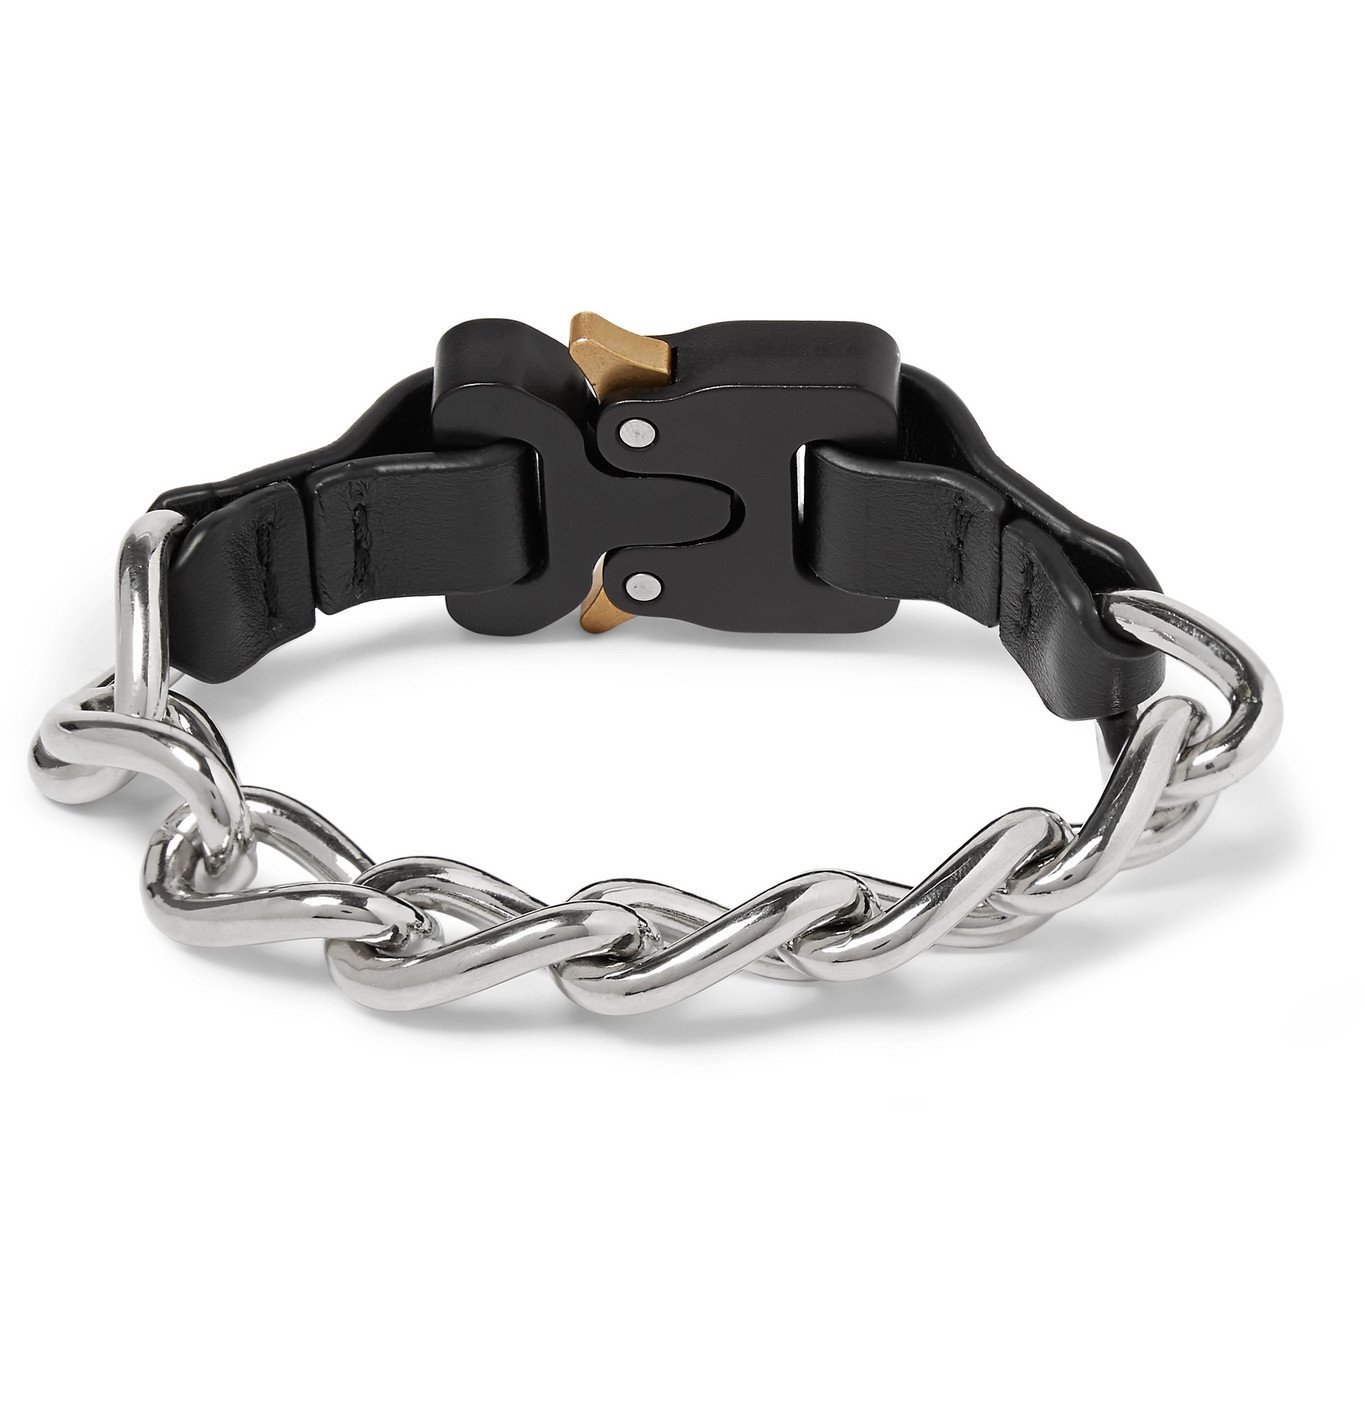 1017 ALYX 9SM - Leather-Trimmed Silver-Tone Bracelet - Black 1017 ALYX 9SM